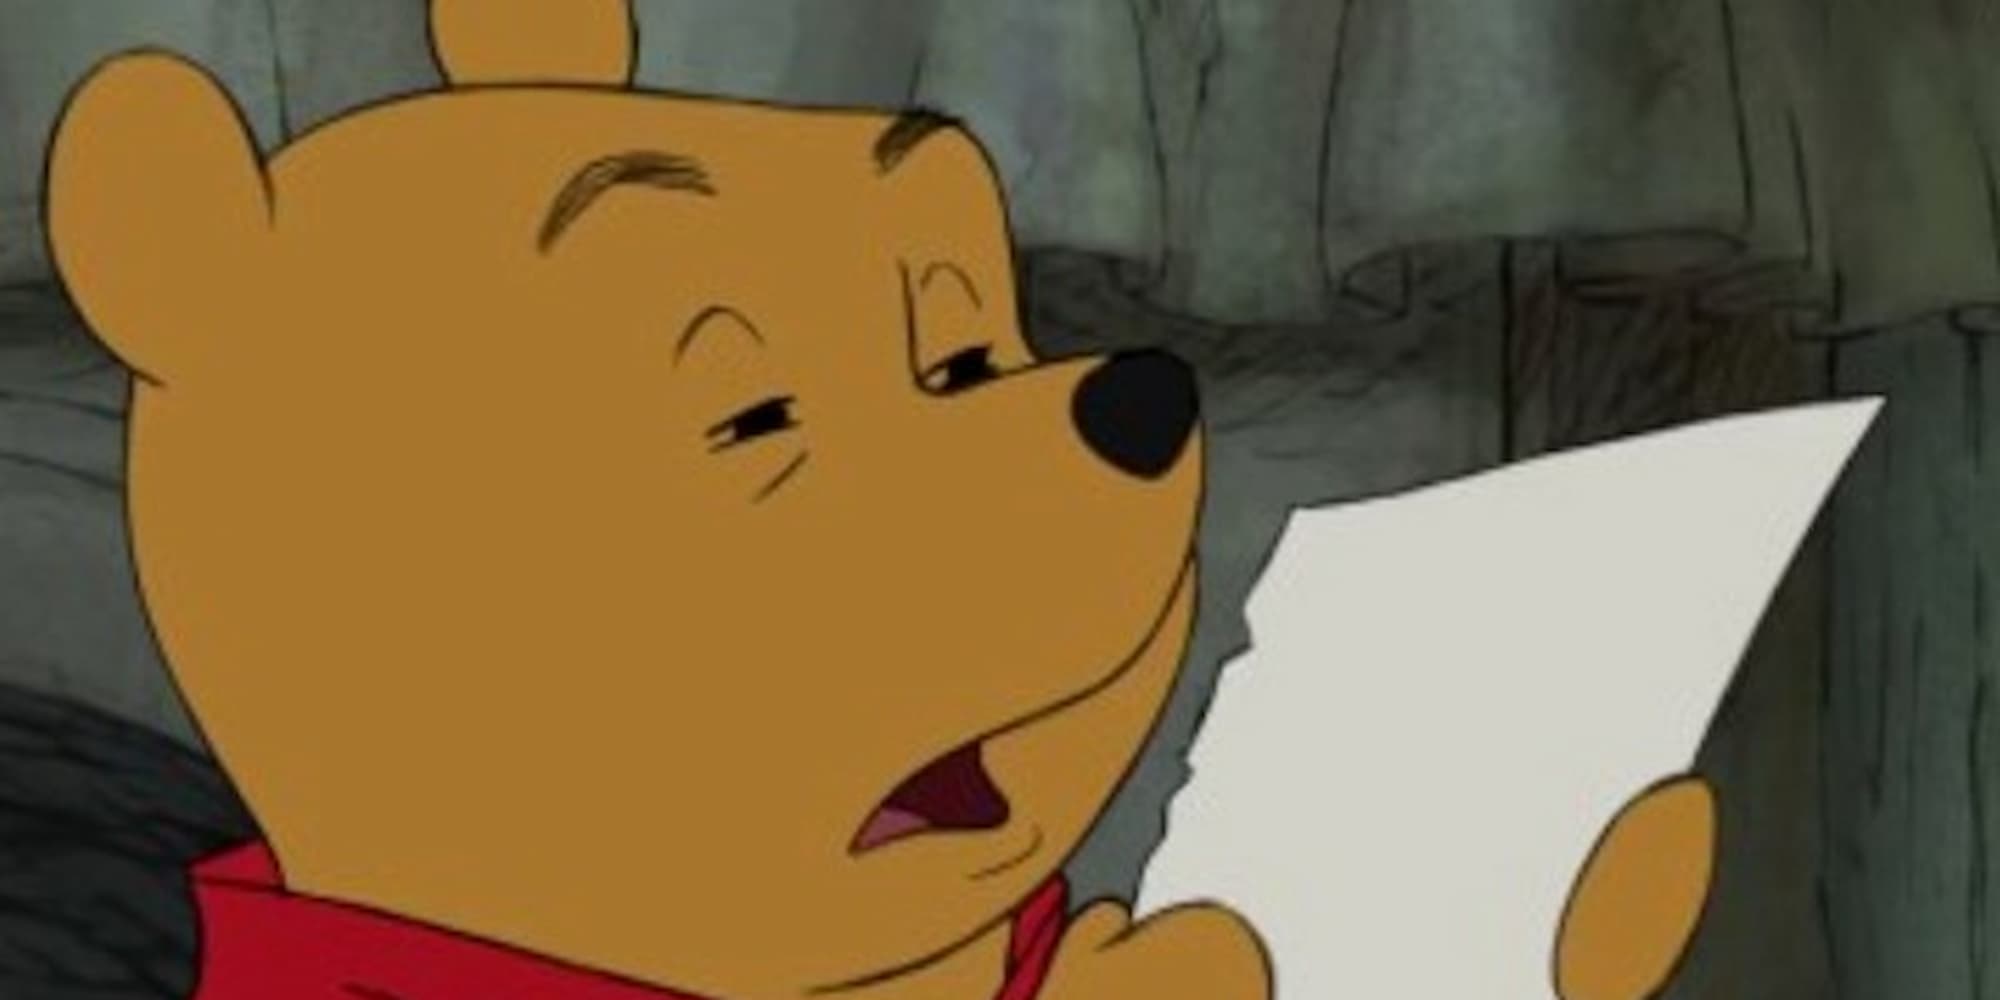 Winnie the Pooh reading